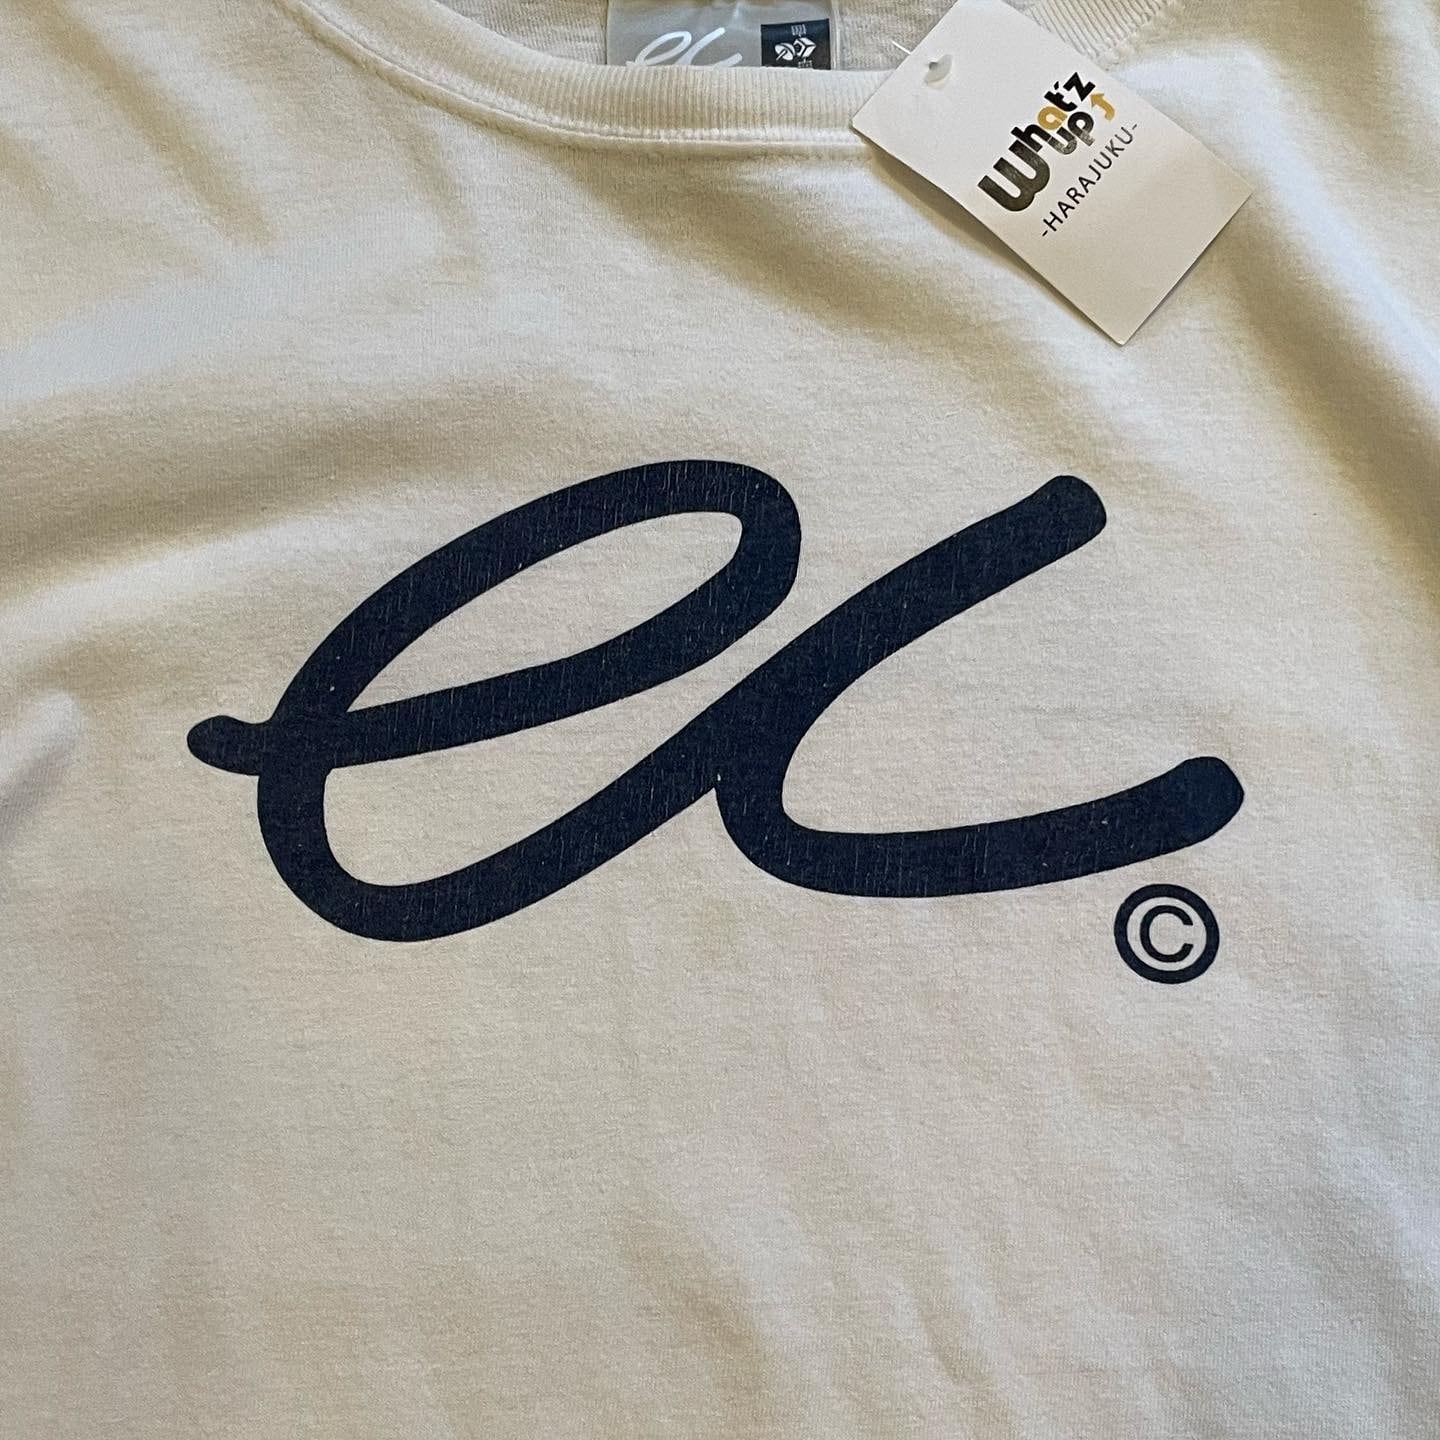 eric clapton/00s tour T-shirt 2001